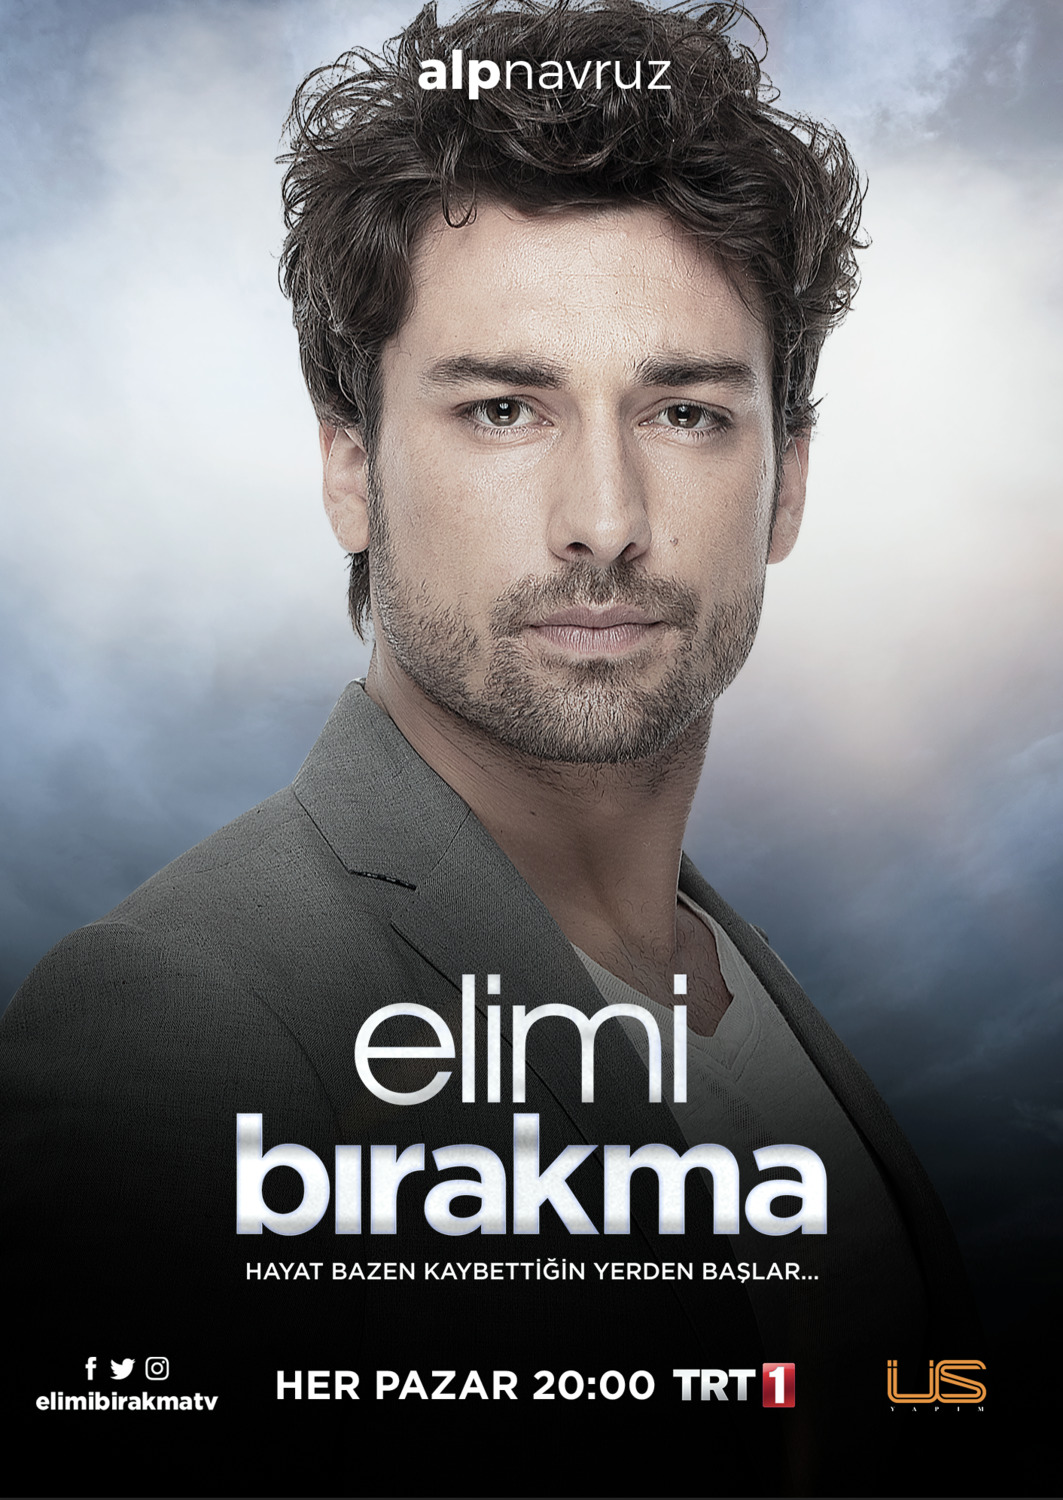 Extra Large TV Poster Image for Elimi birakma (#20 of 20)